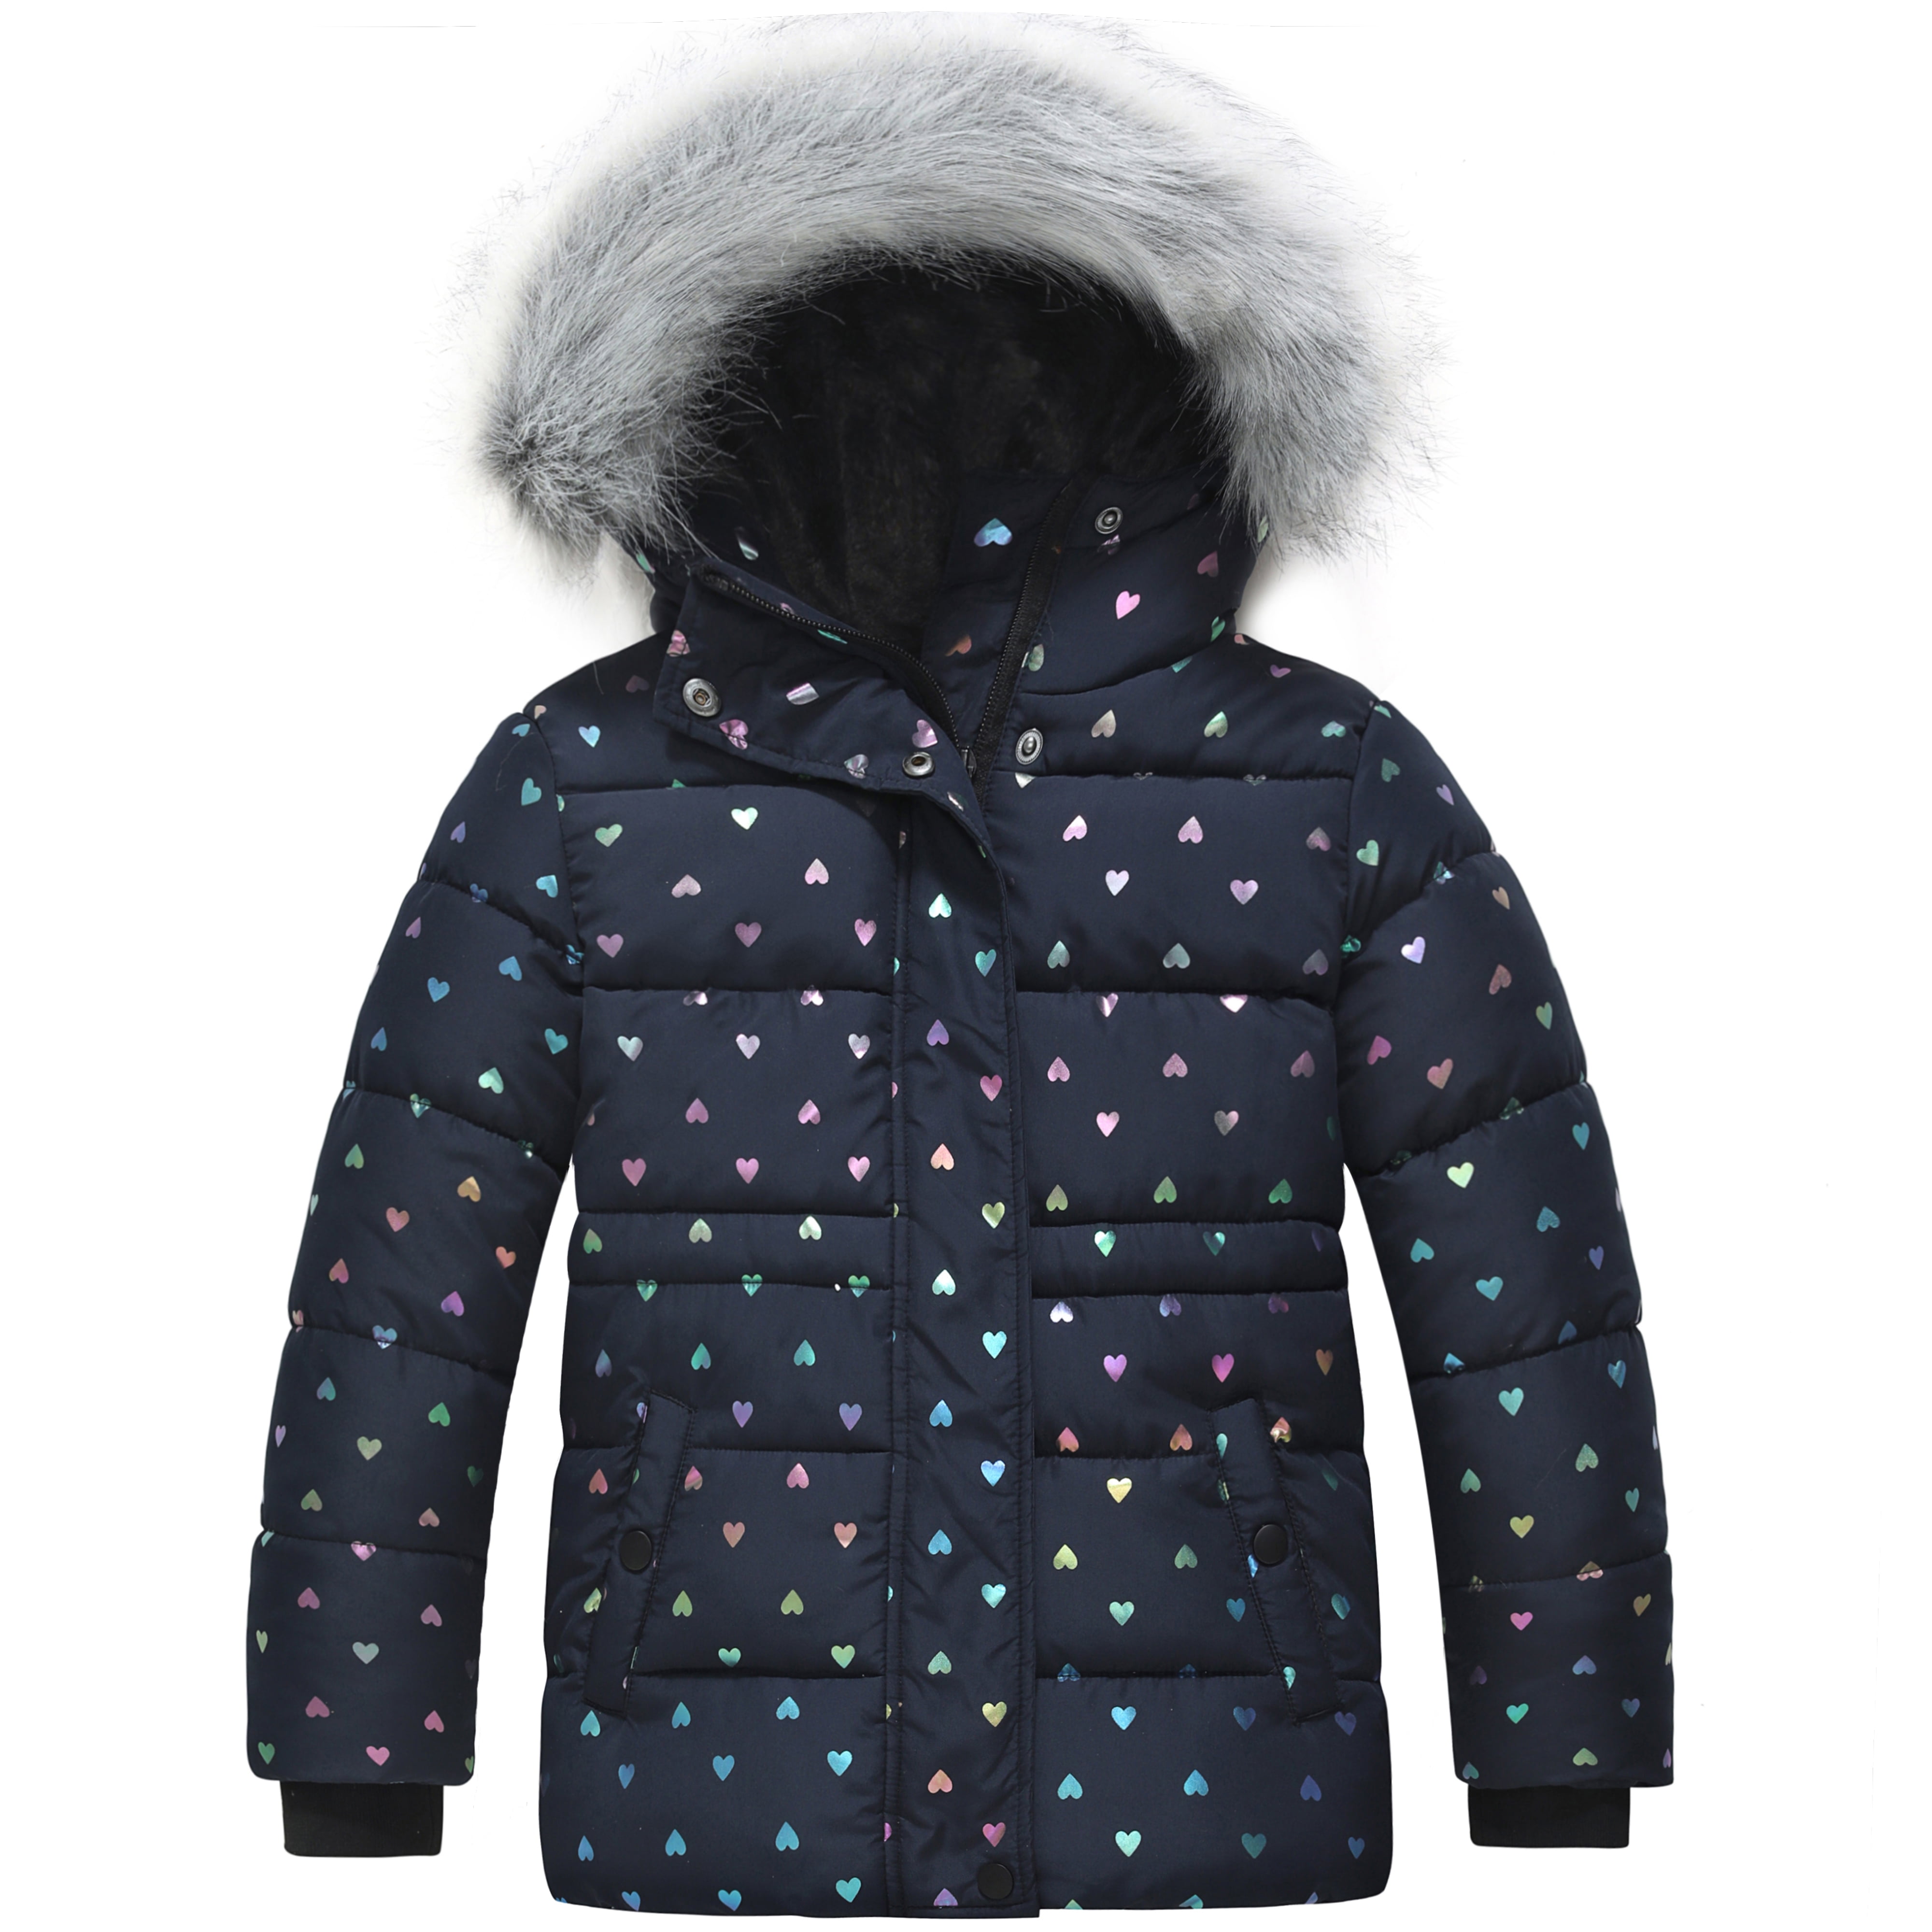 Wantdo Boy's Mid-Long Warm Winter Coat Quilted Fleece Lined Puffer Jacket with Detachable Fur Hood 